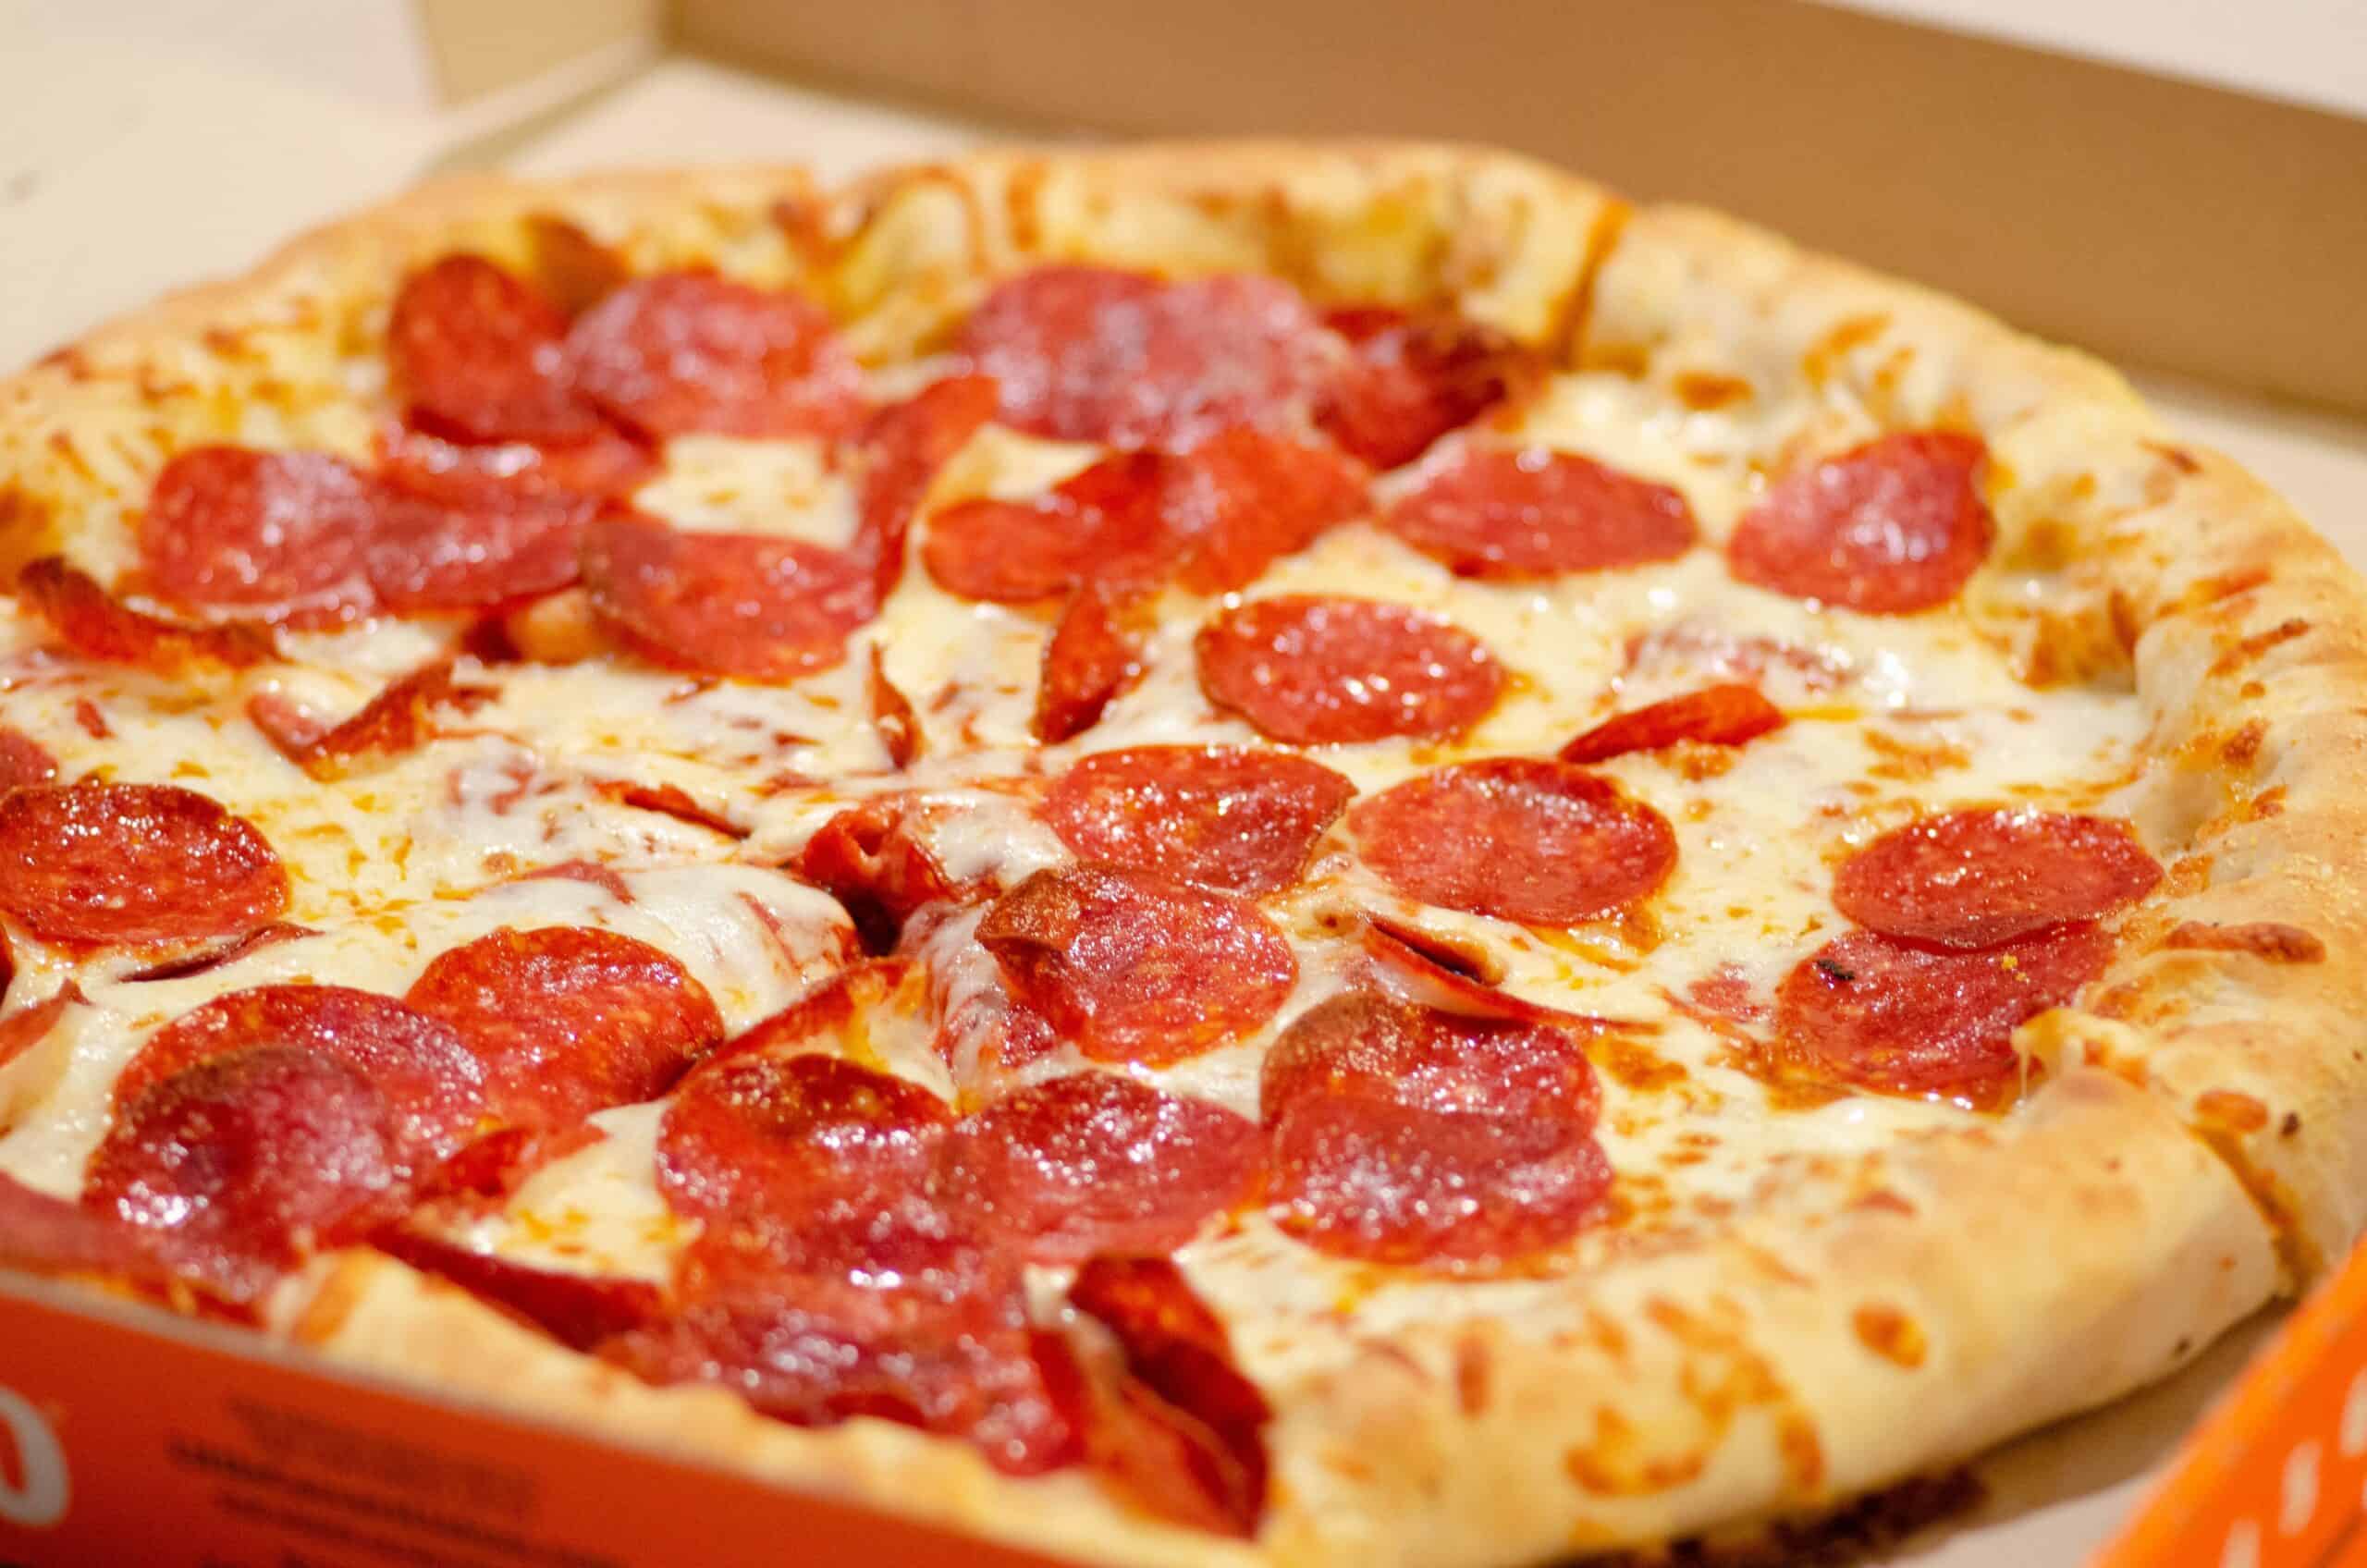 Pepperoni pizza in a pizza box